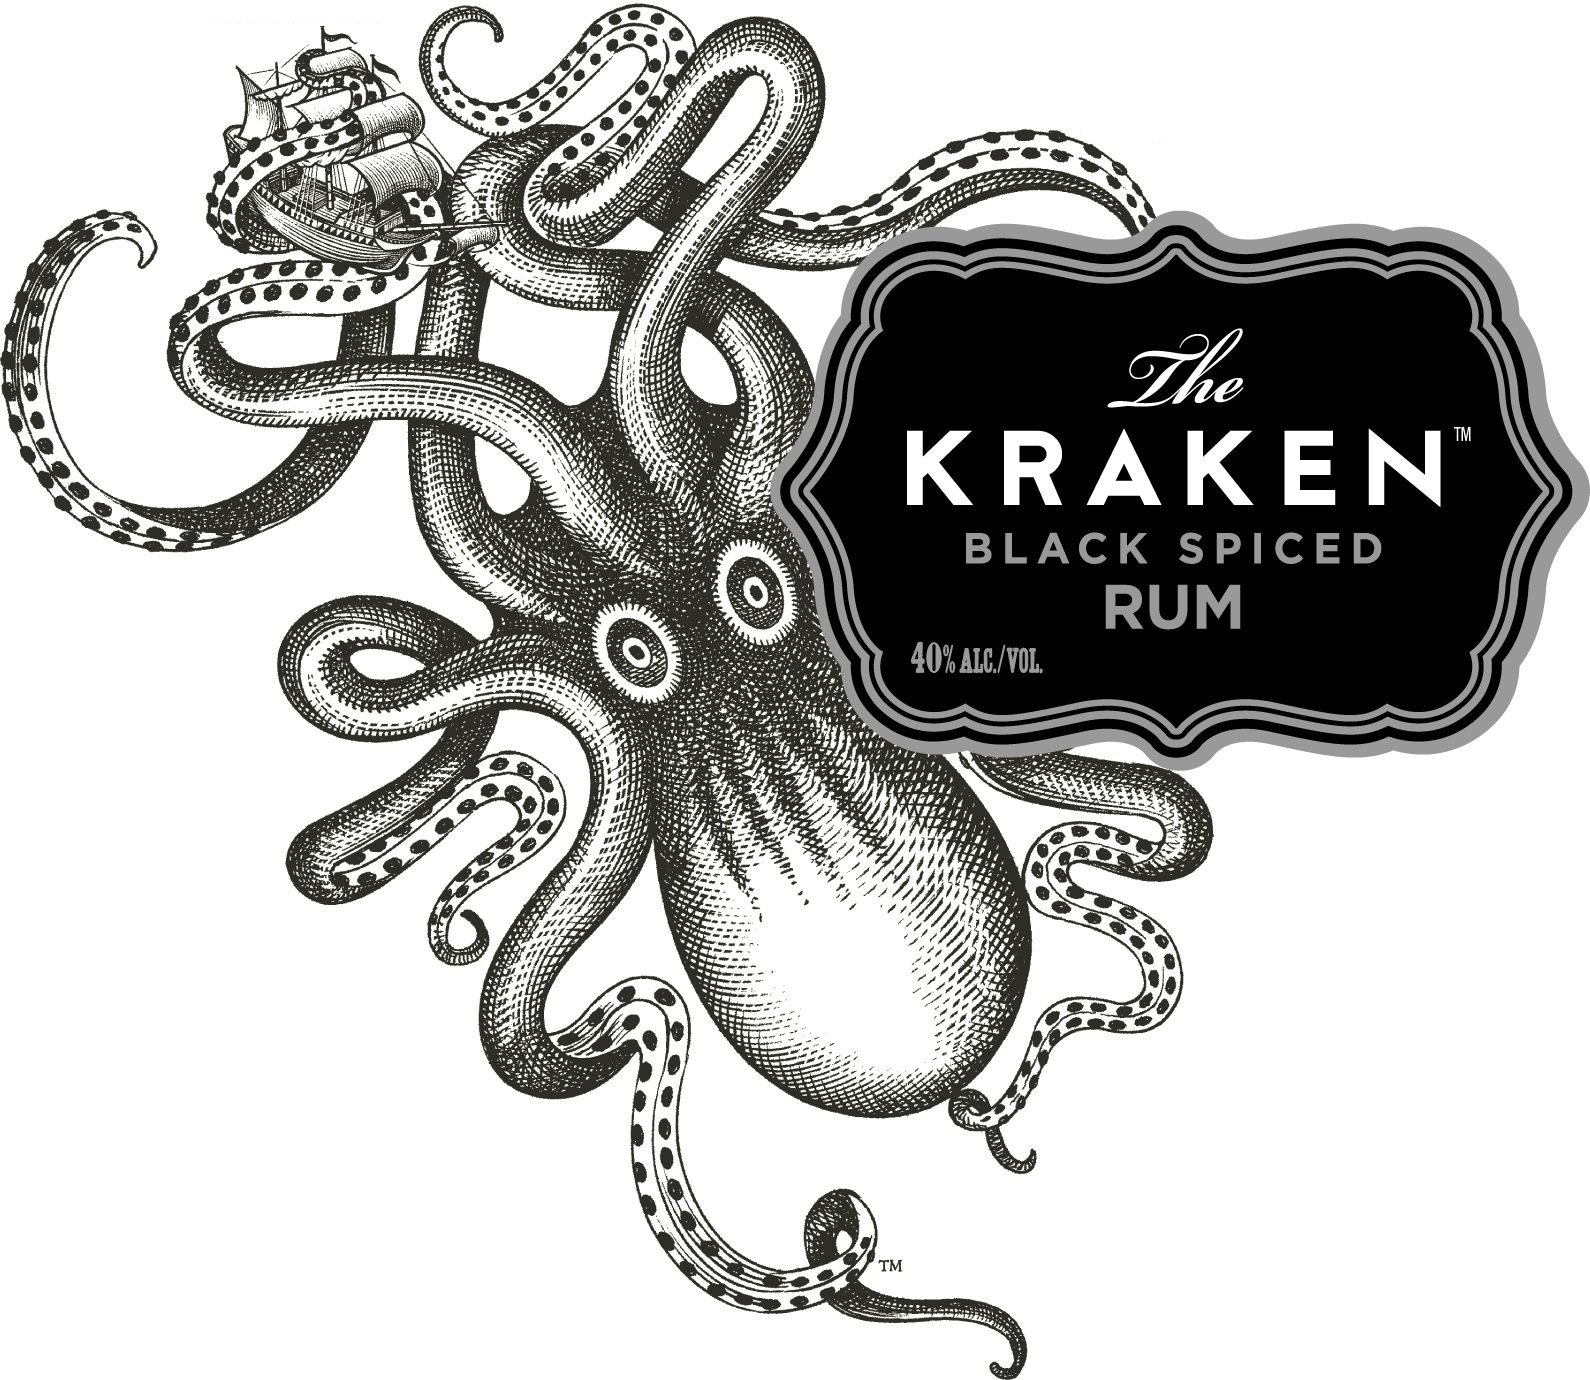 Kraken qr код. Kraken rum этикетка. Ром Kraken Black Spiced. Кракен логотип. Ром с осьминогом на бутылке.